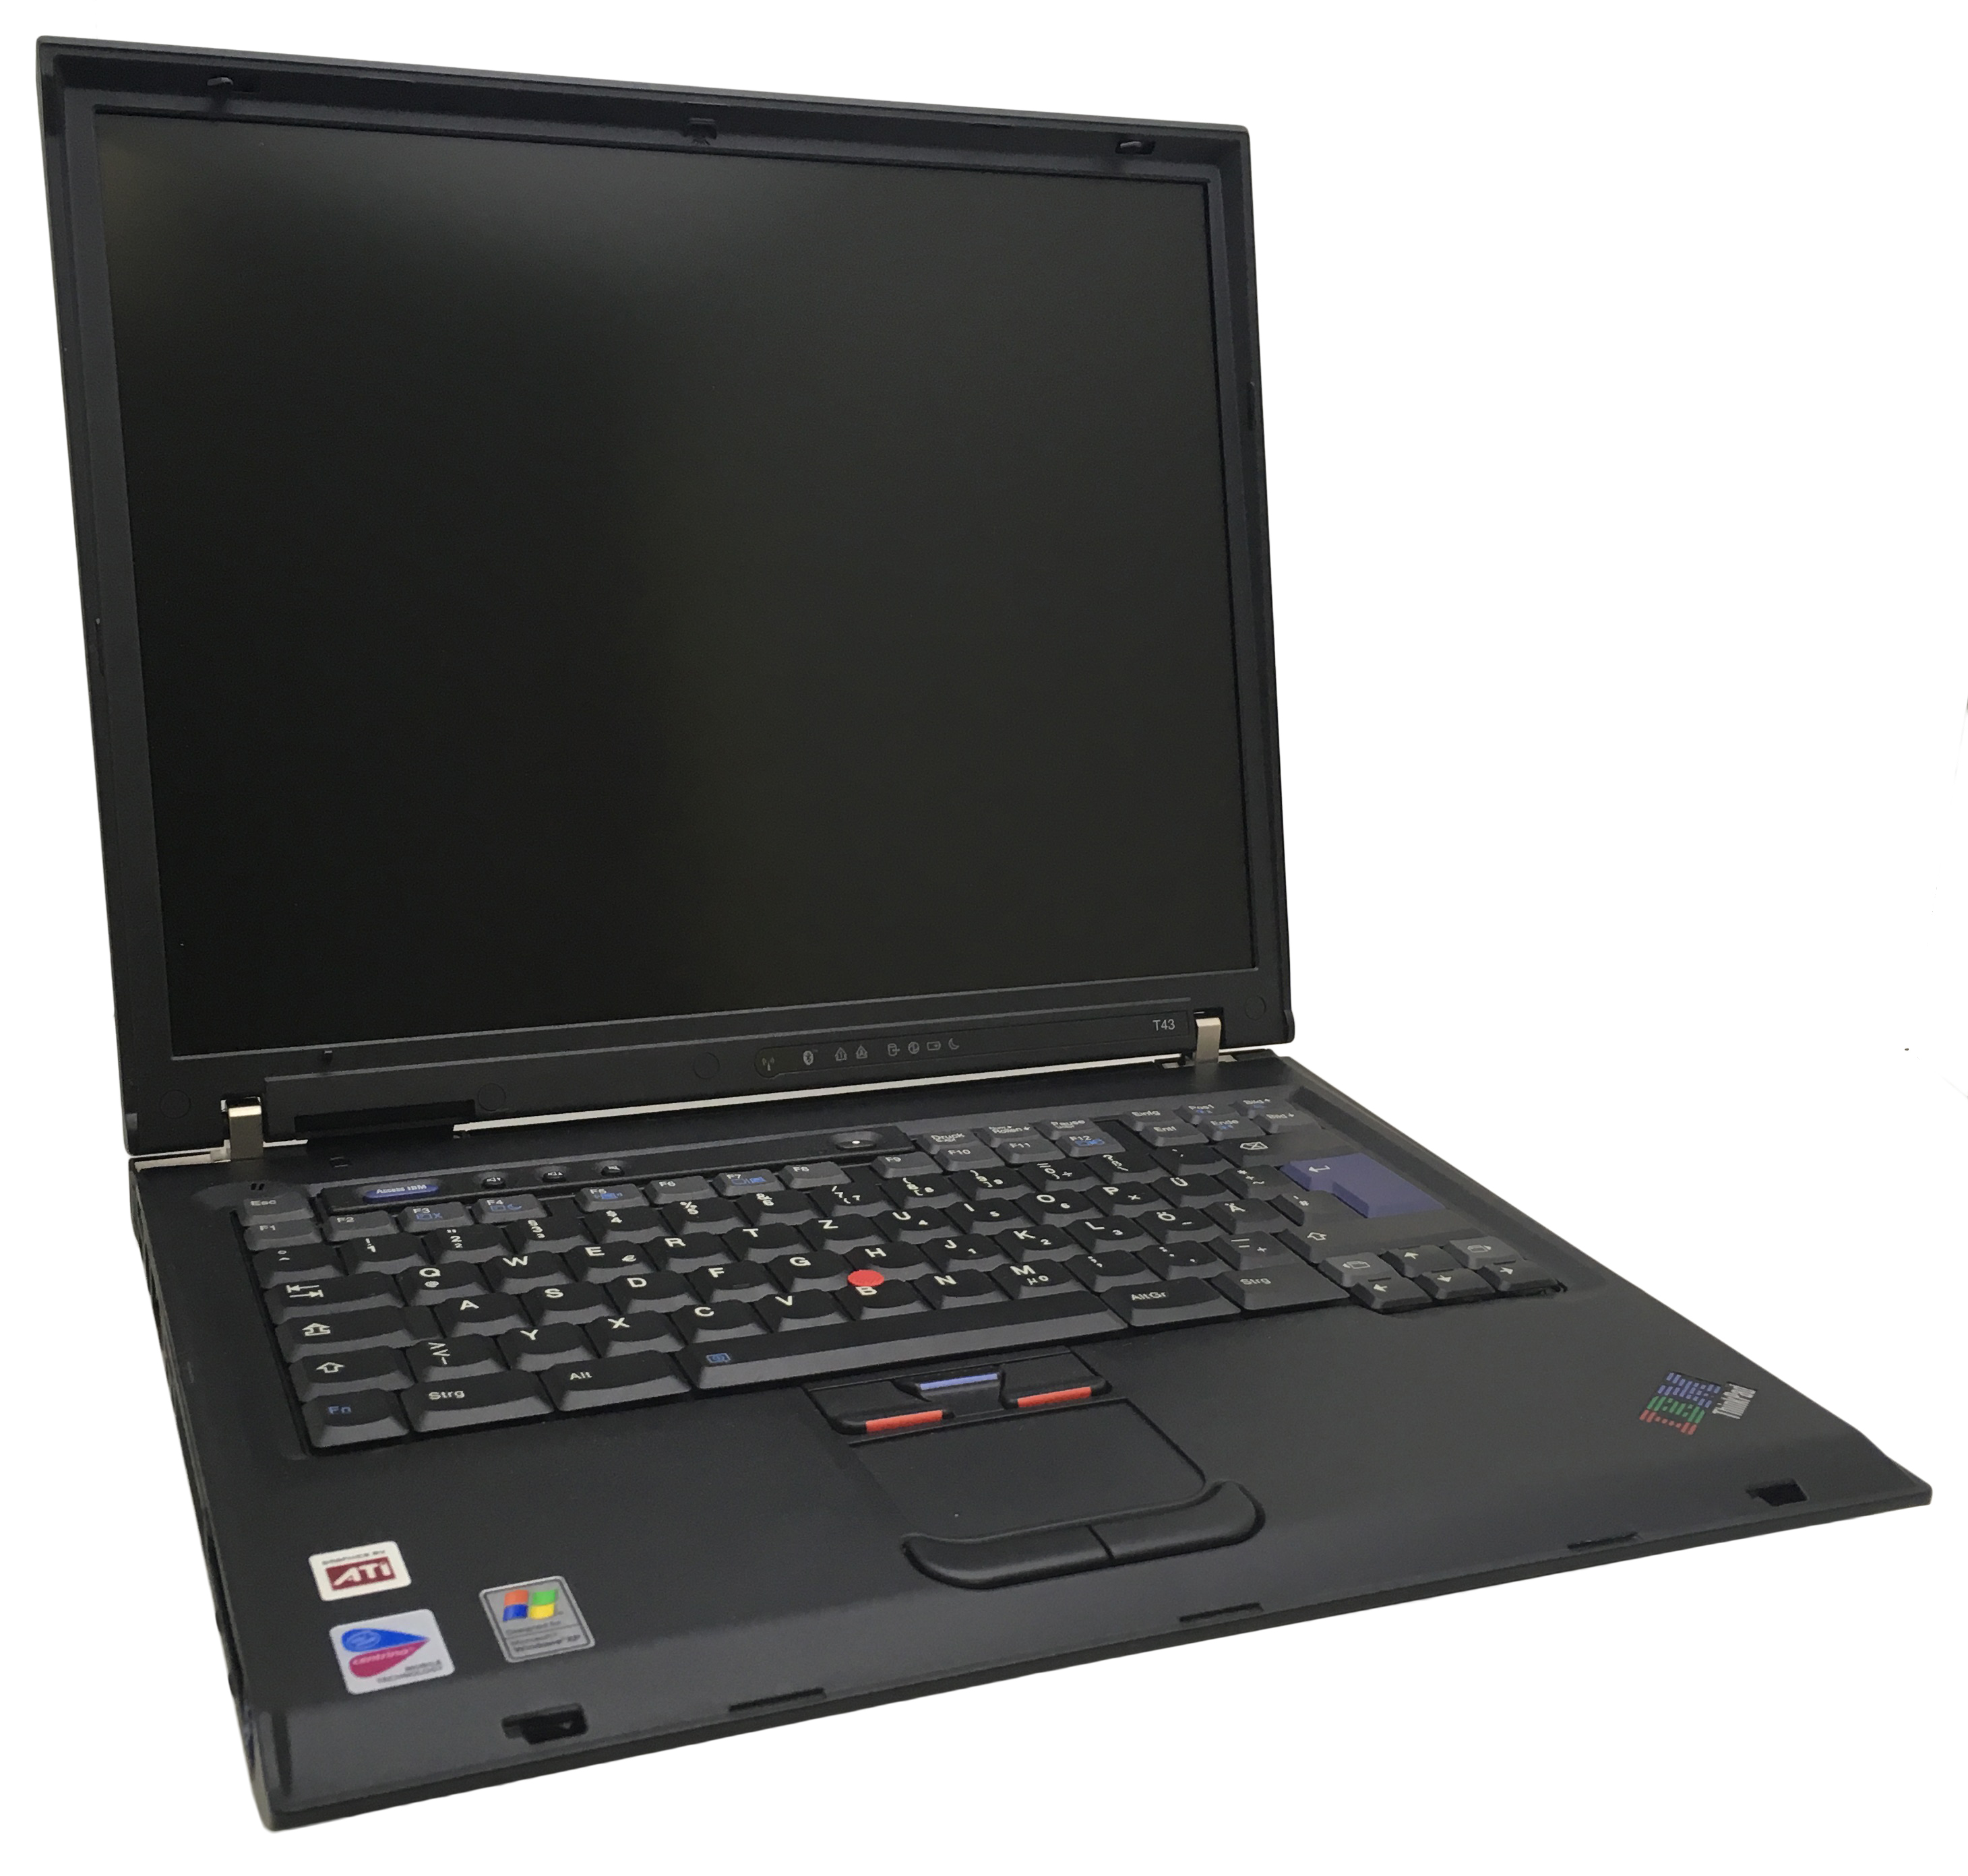 Laptop IBM Thinkpad T43 Pentium M 750 1GB Ram spots/efficient on